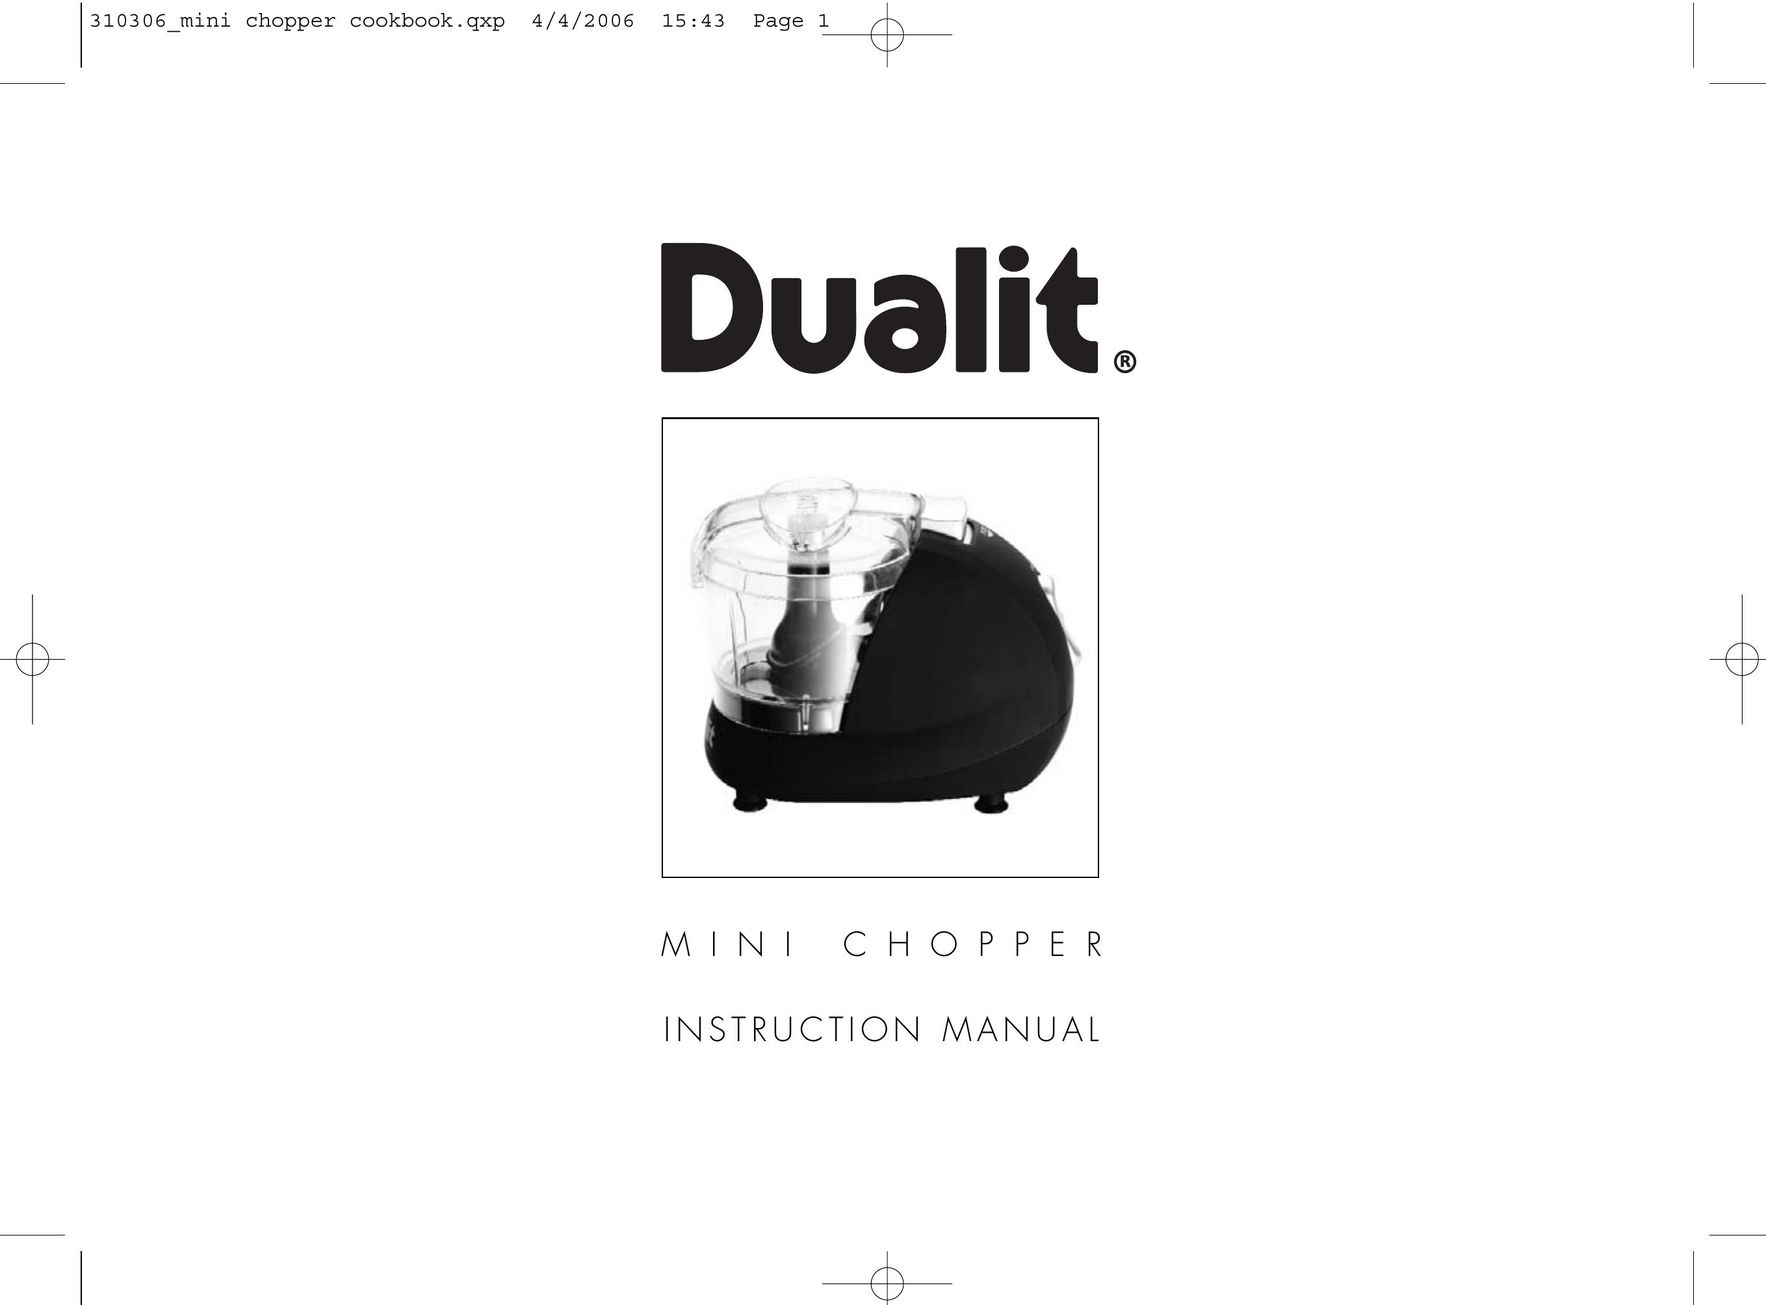 Dualit 310306 Food Processor User Manual